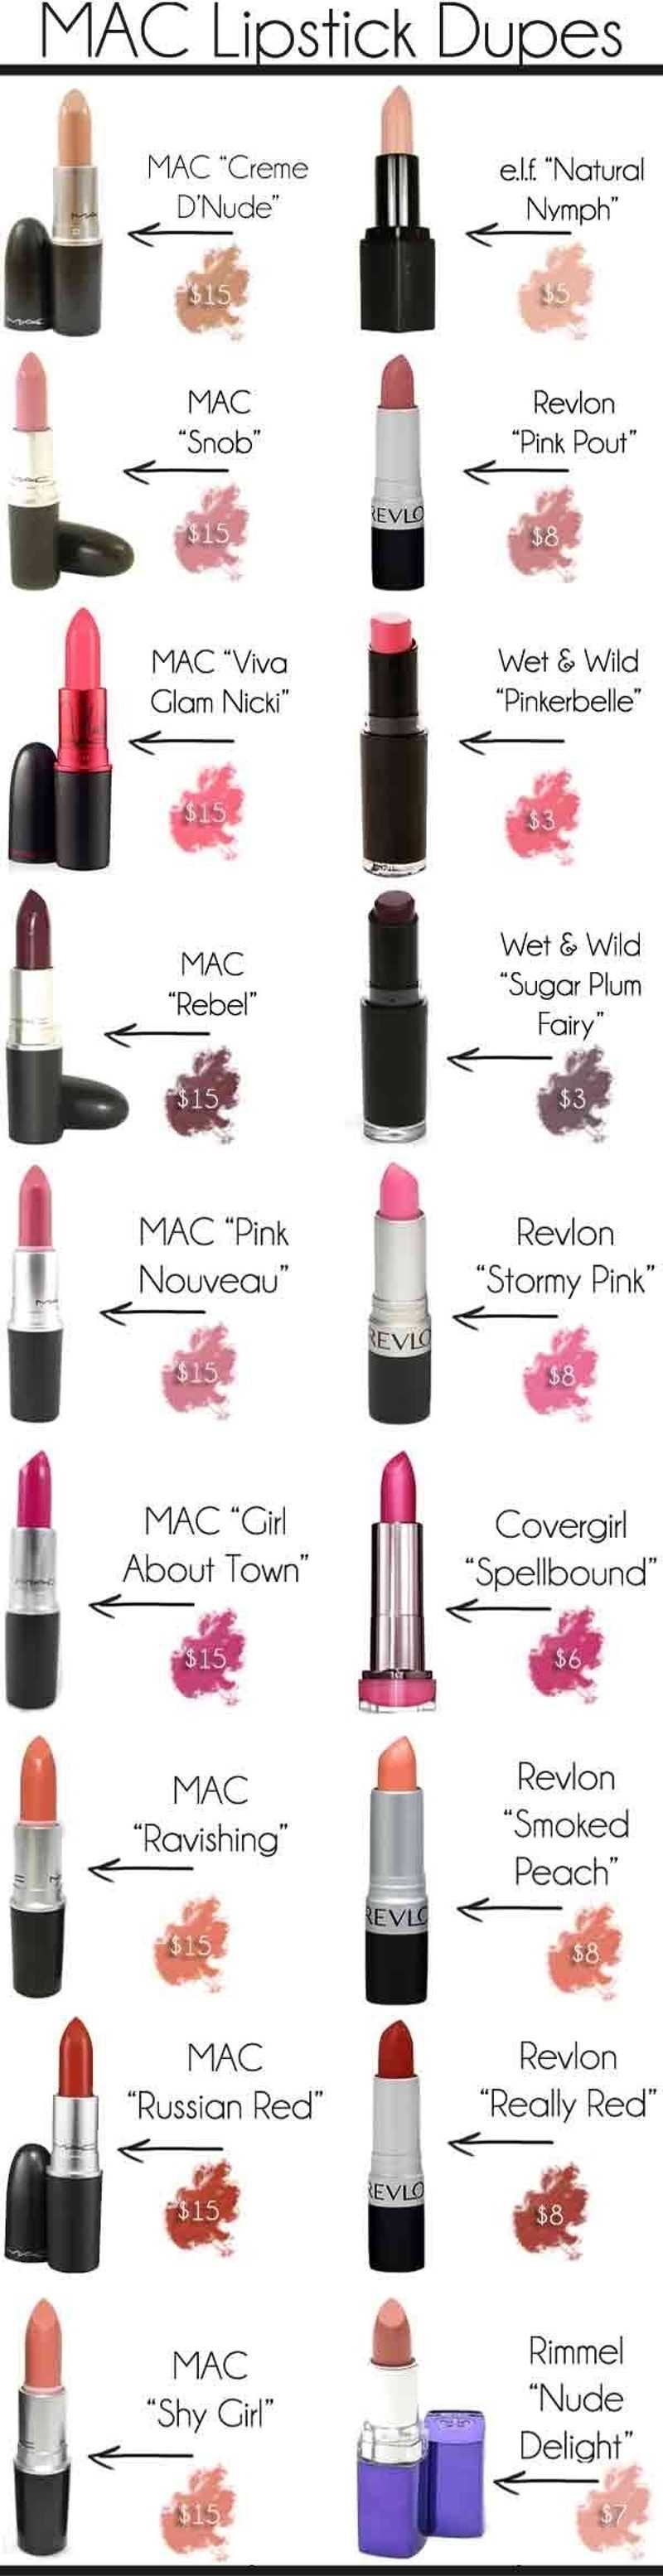 MAC Lipstick Dupes